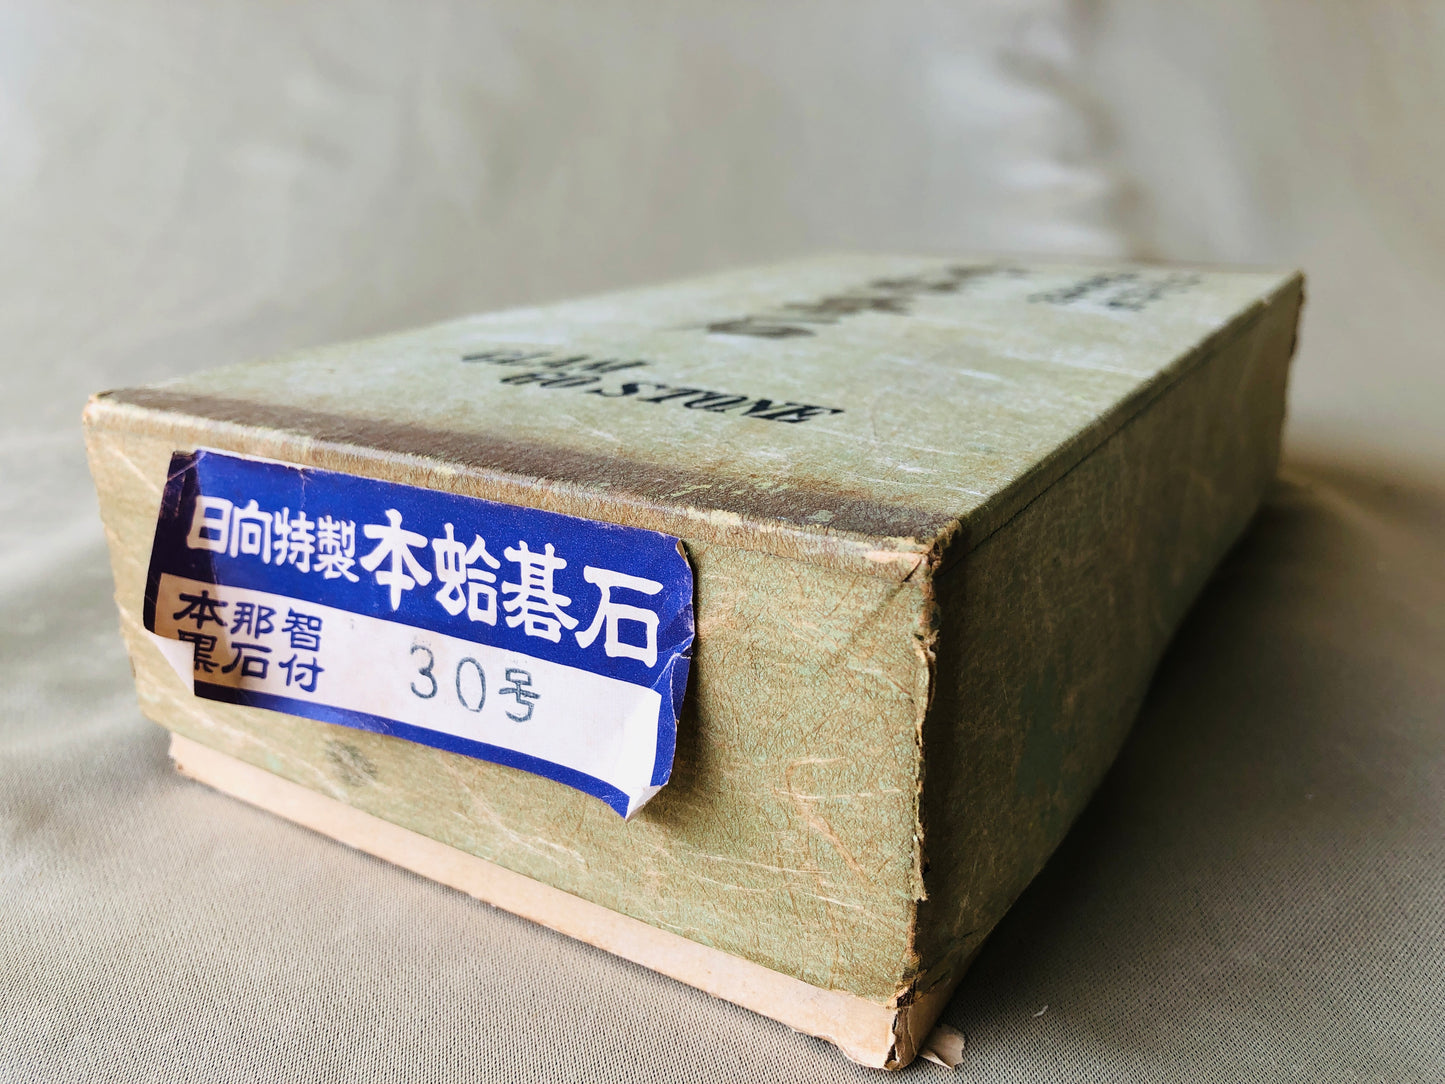 Y4304 GO white black stones clam Nachiguro No.30 box Japan antique mind sport